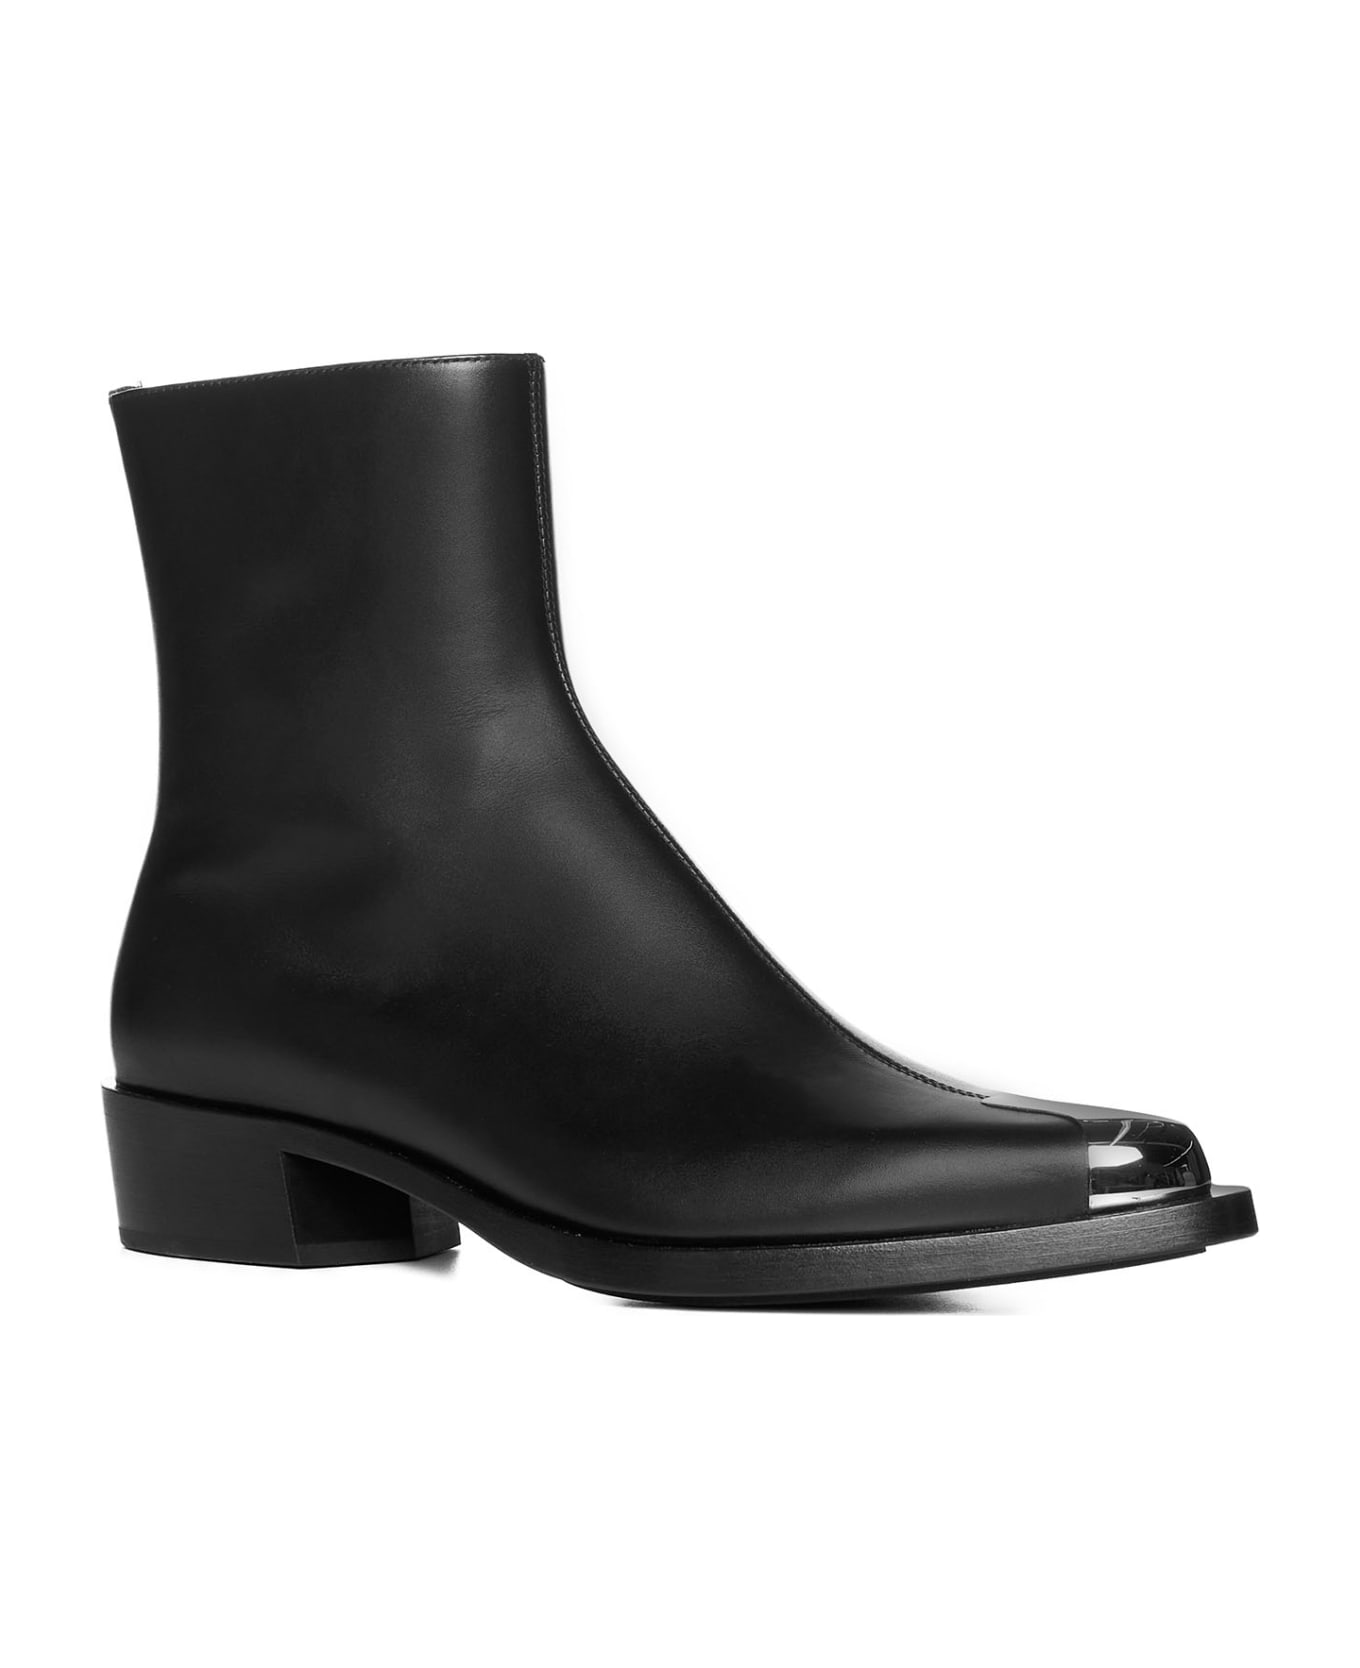 Alexander McQueen Metal Toe Side Zipped Boots - Nero argento ブーツ